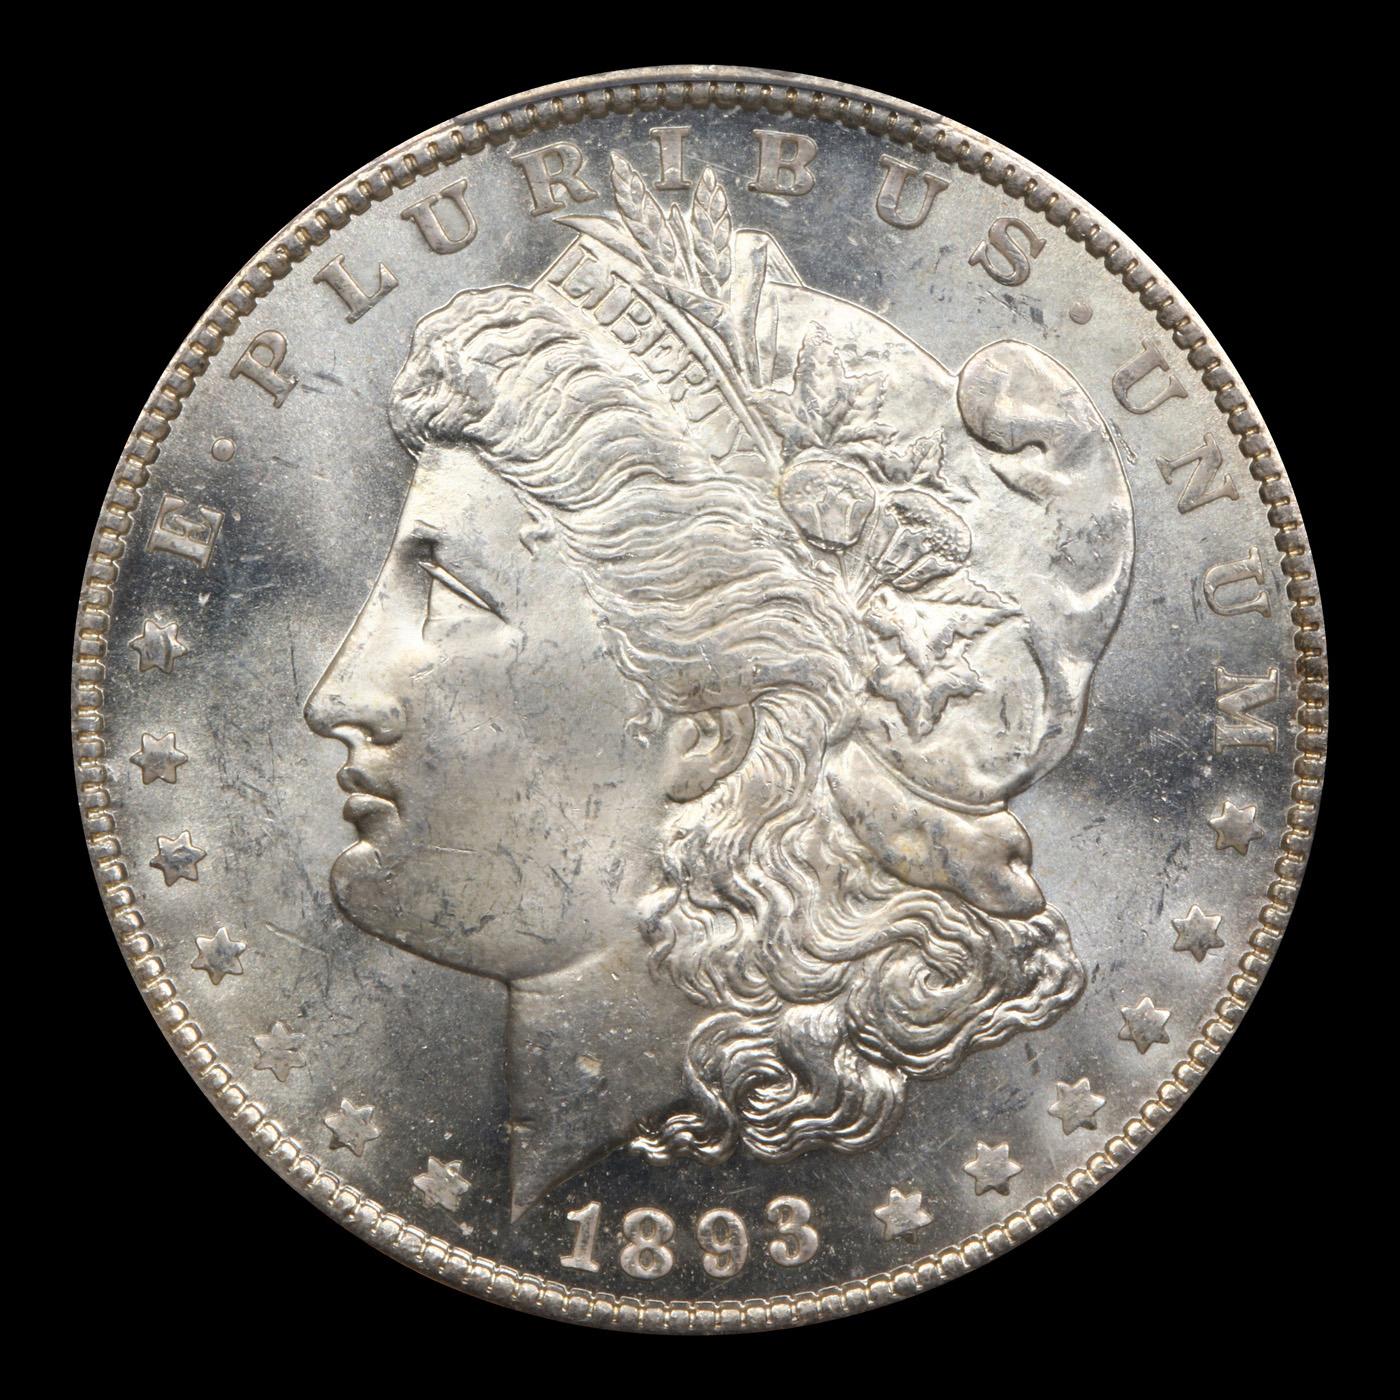 ***Auction Highlight*** 1893-o Morgan Dollar $1 Graded ms65 By SEGS (fc)